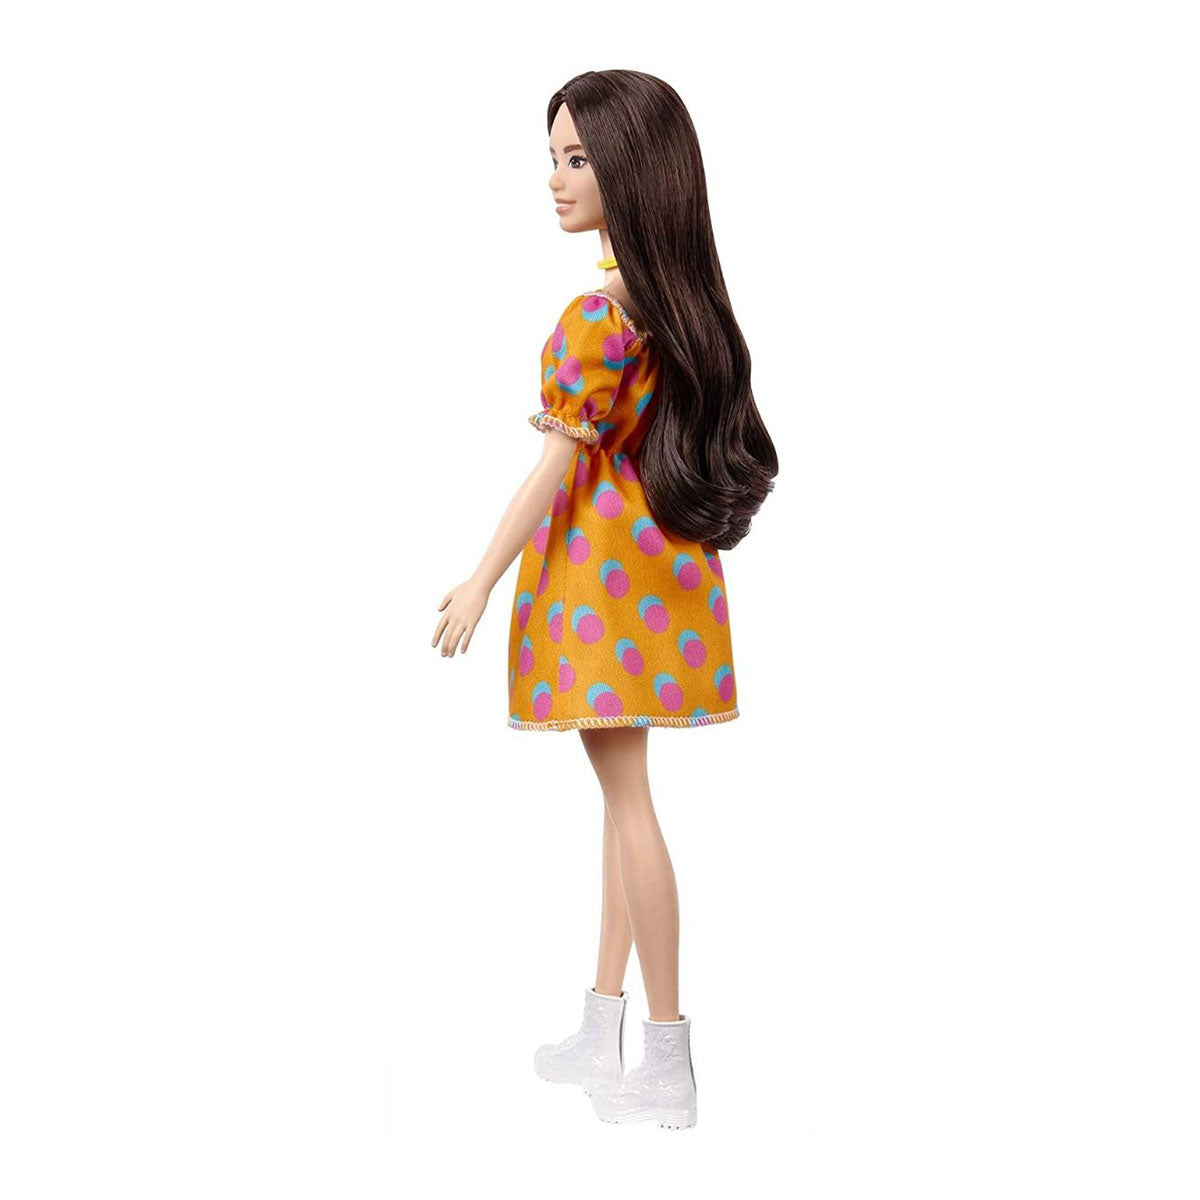 Barbie - Polka Dot Dress Fashion Doll